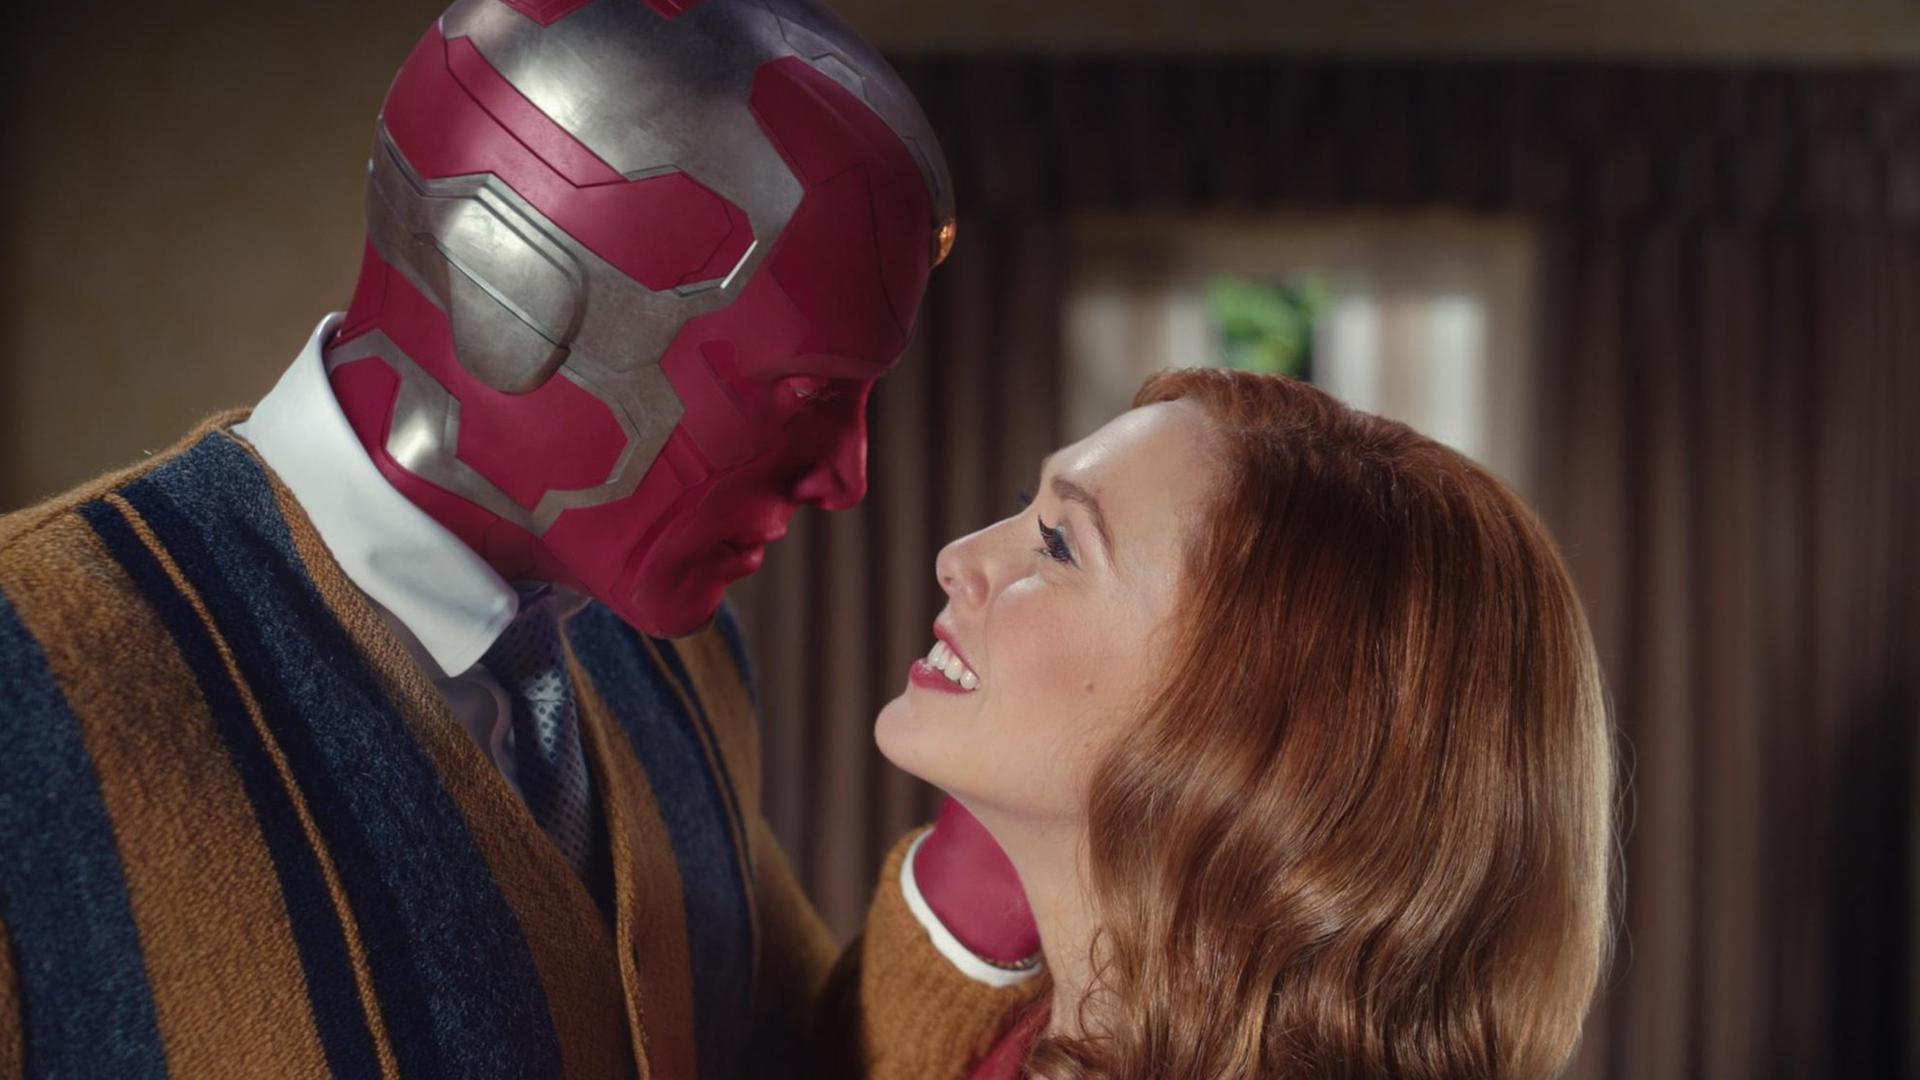 Mann mit Maske und Frau sehen sich an: Paul Bettany als VIsion and Elizabeth Olsen als Wanda Maximoff in der Serie "WandaVision".